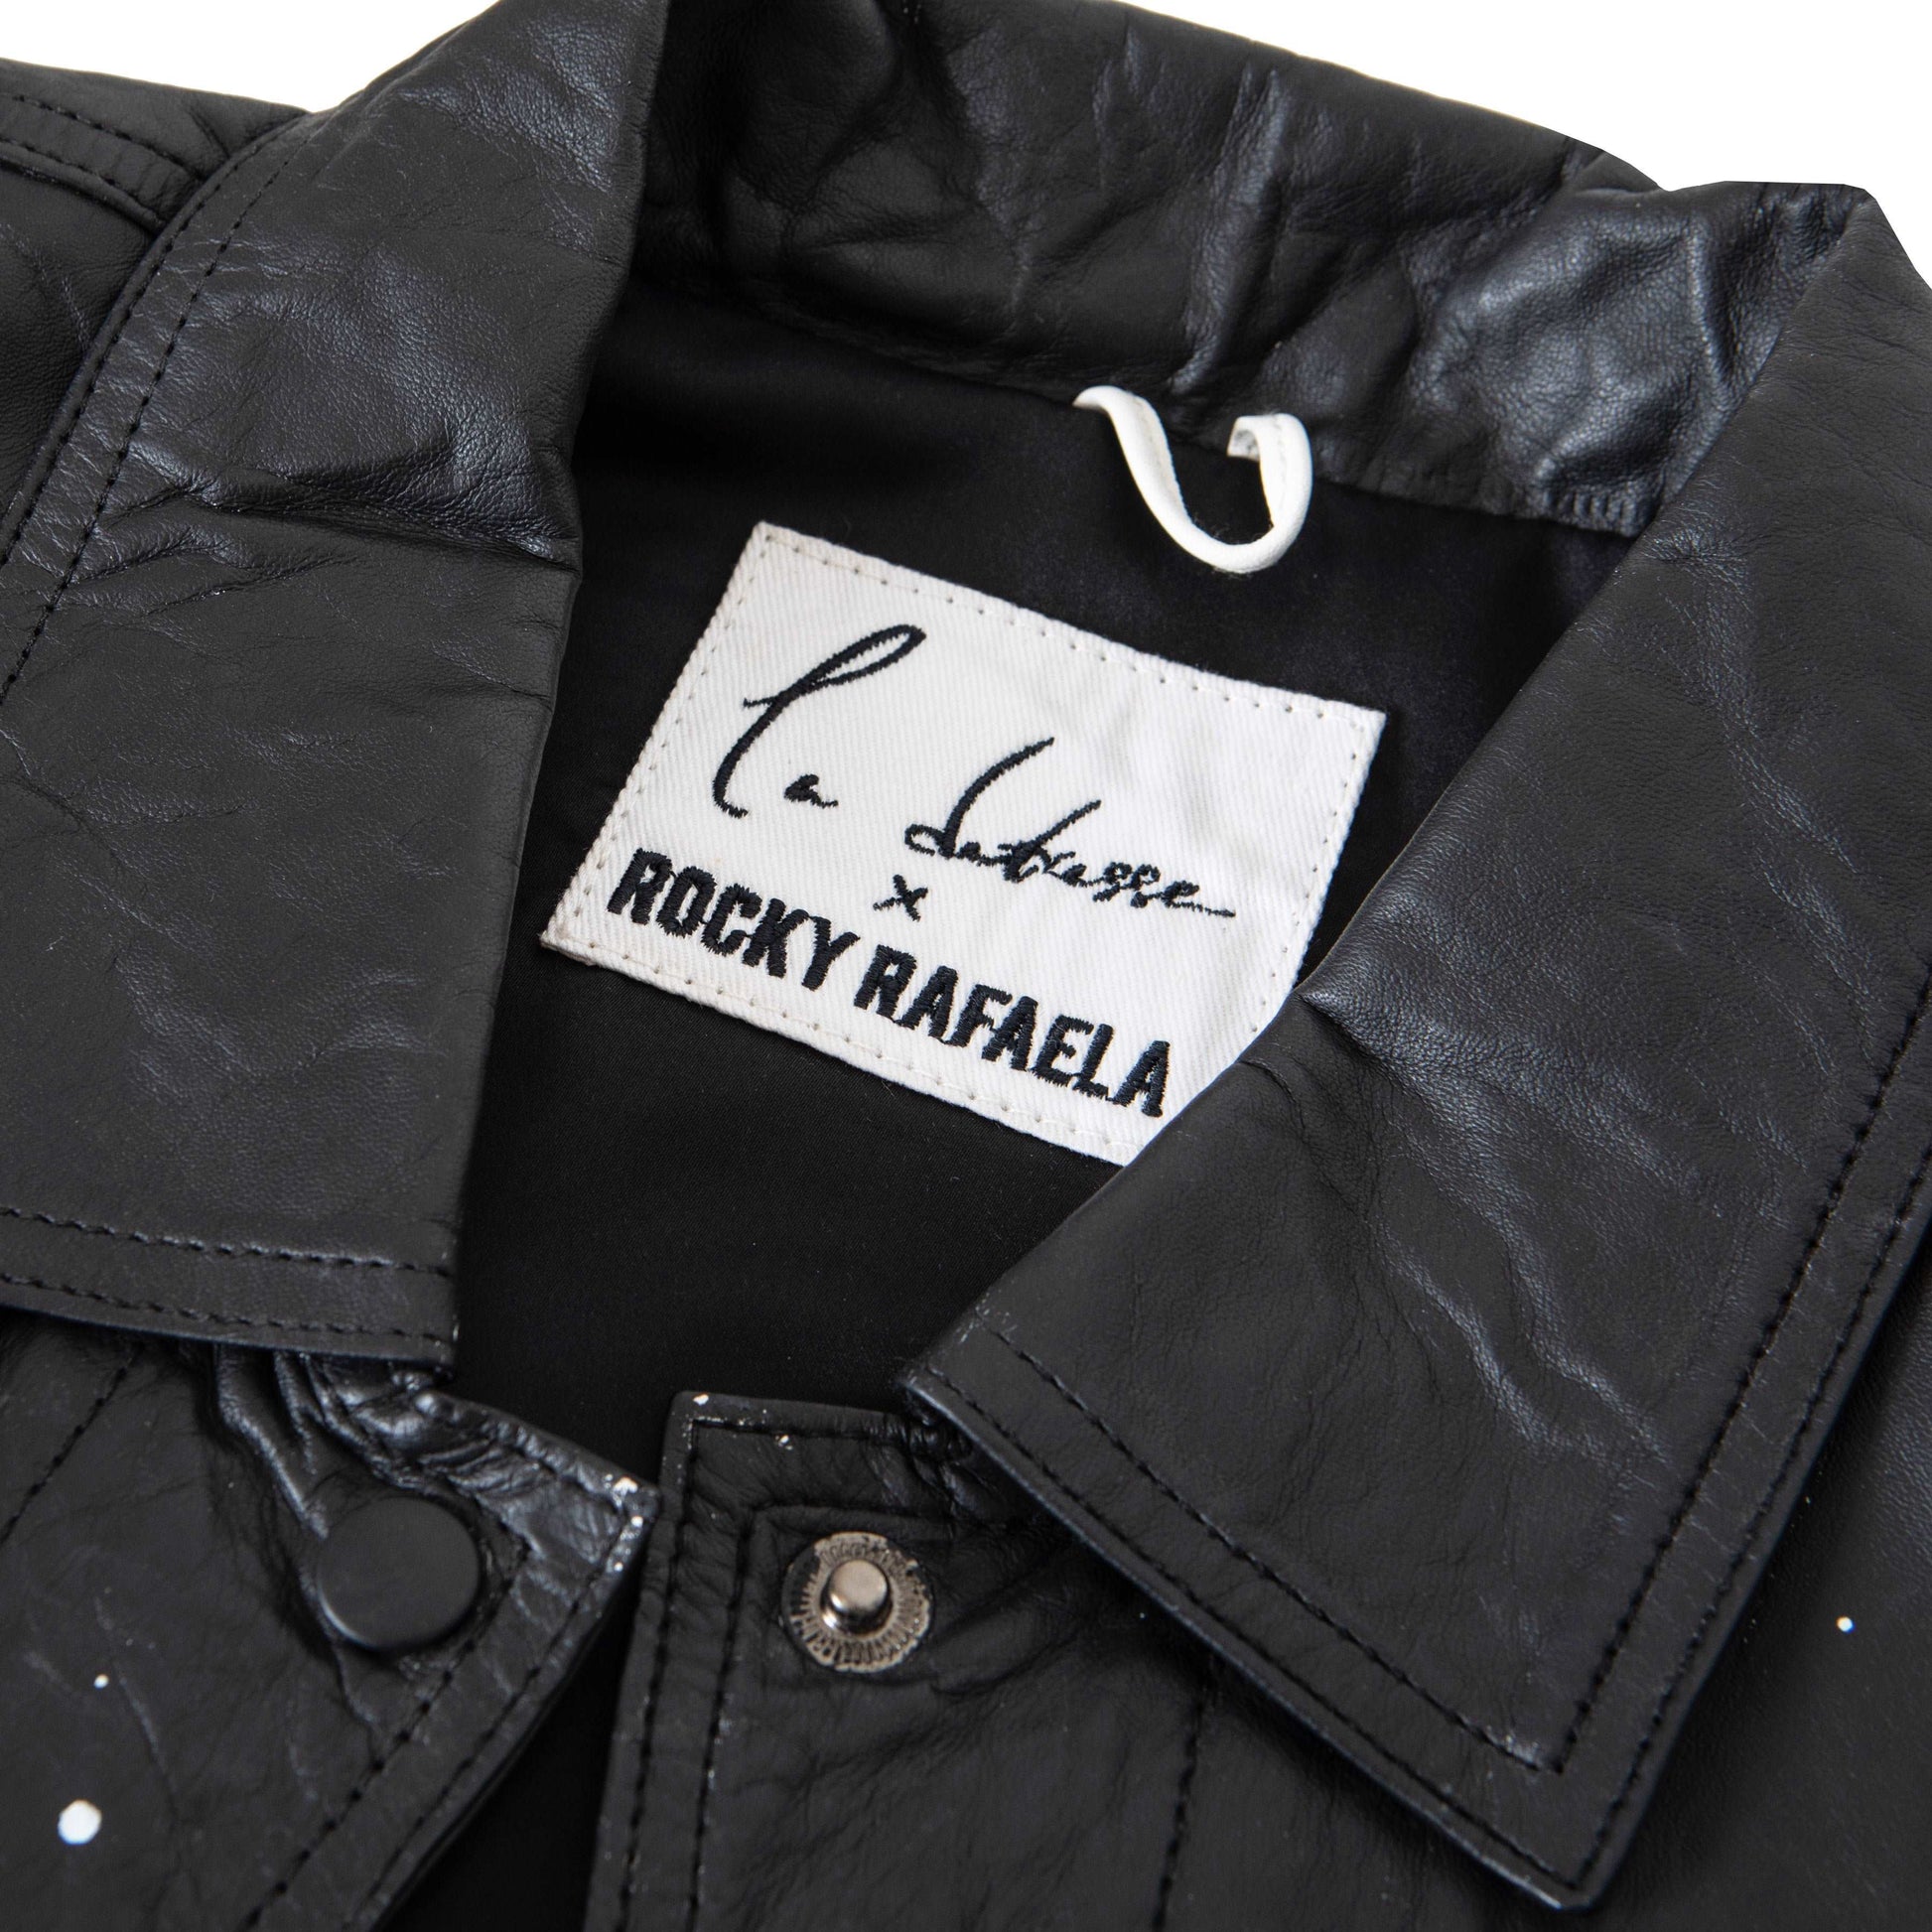 Rocky Rafaela x La Detresse Paint Drop Jacket